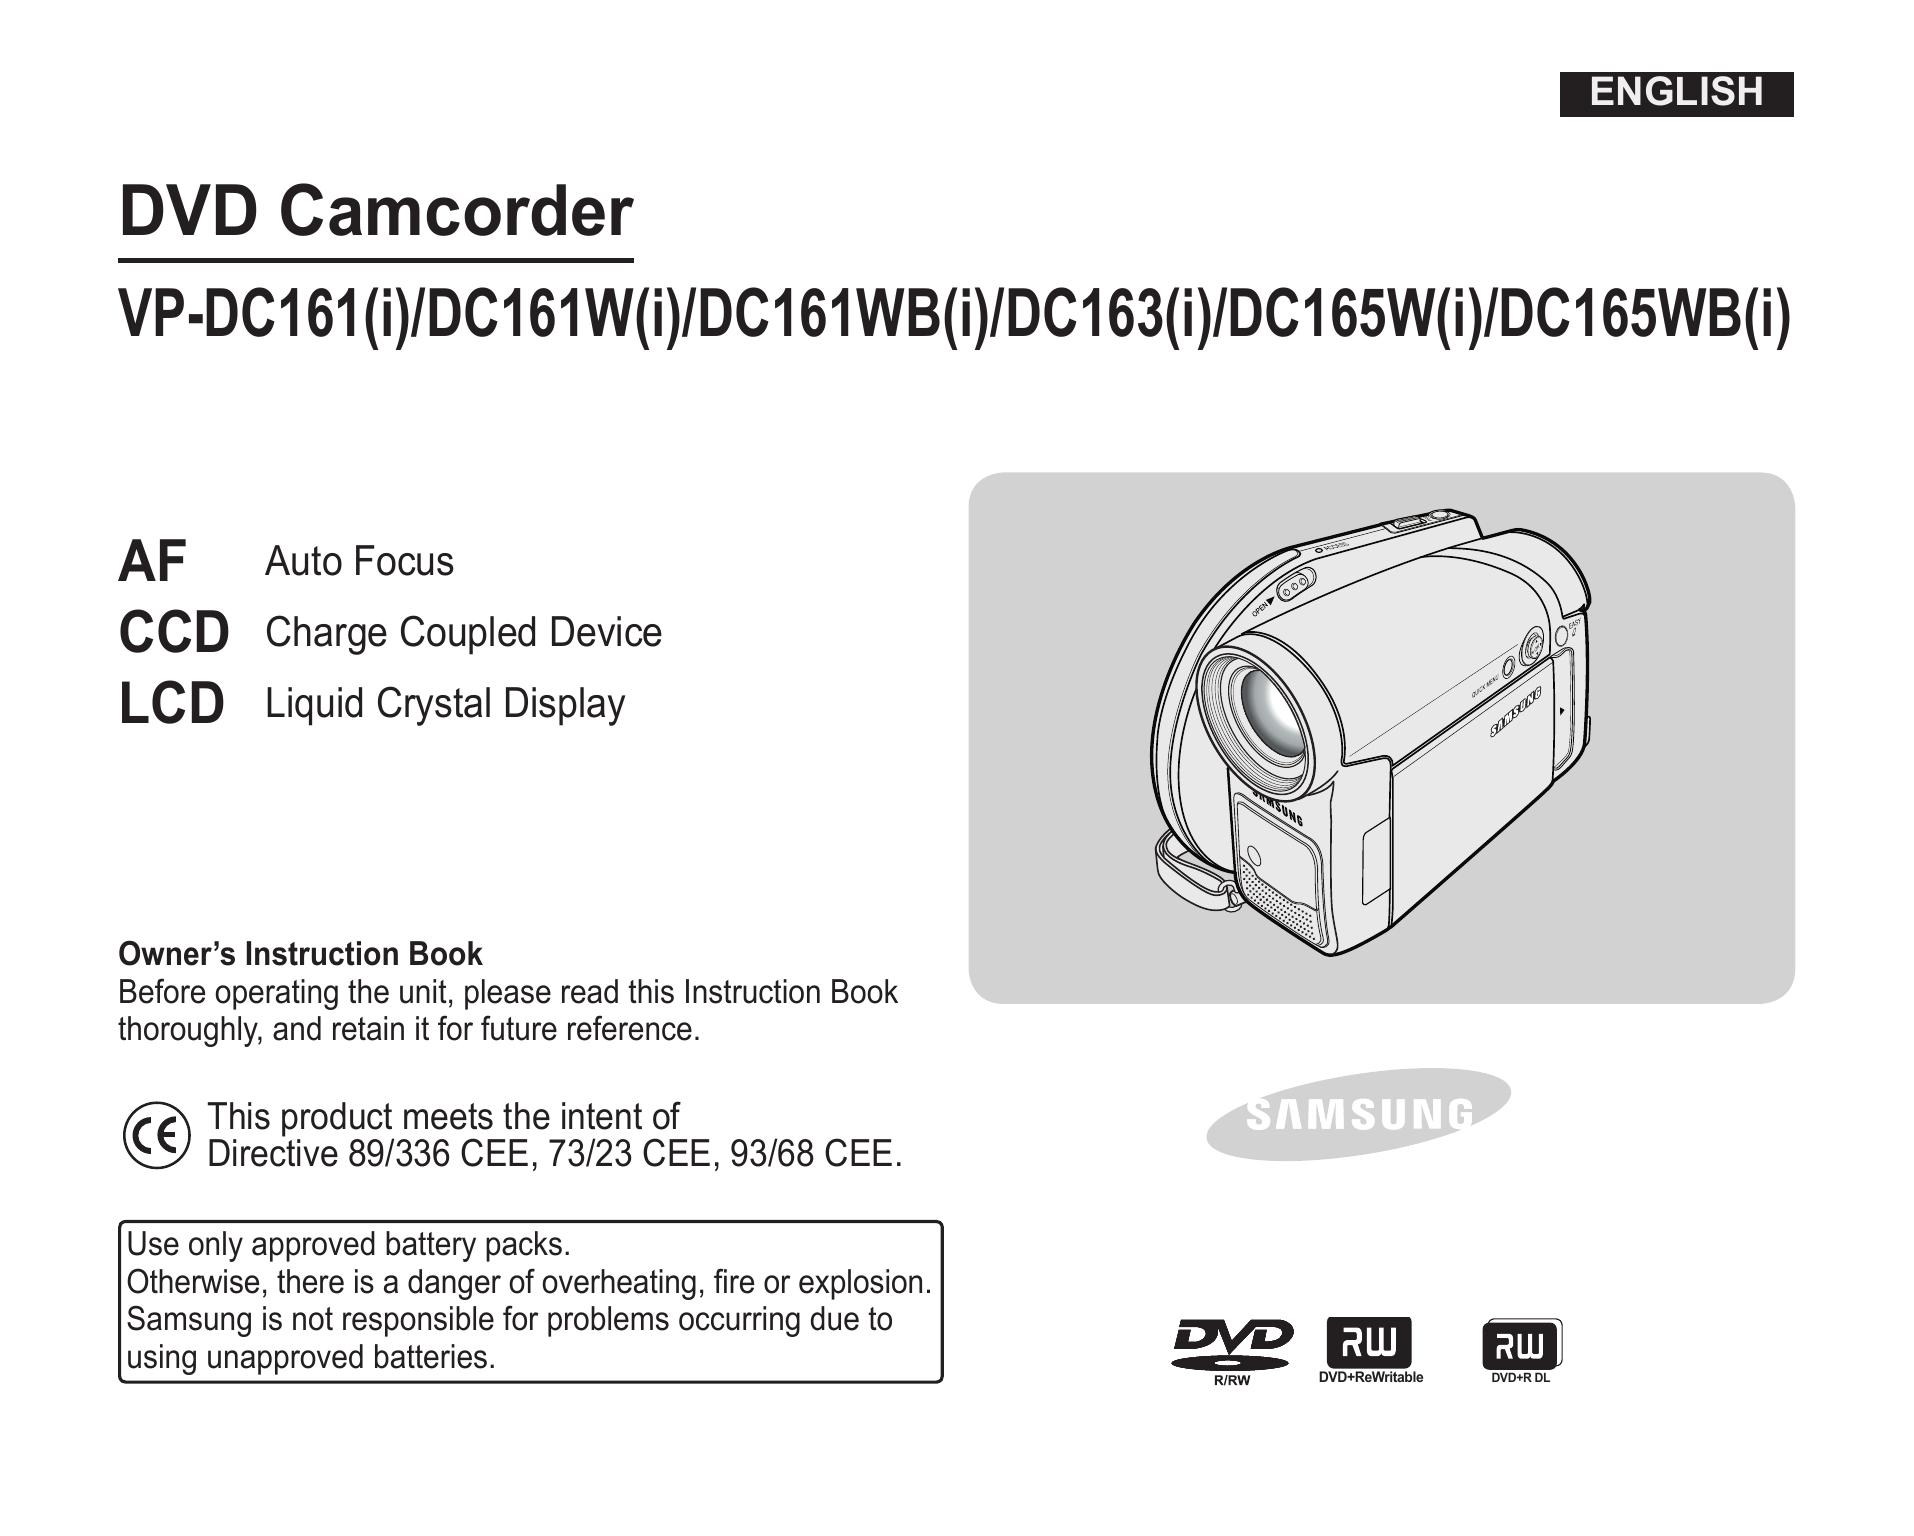 Samsung DC161W(i) Camcorder User Manual